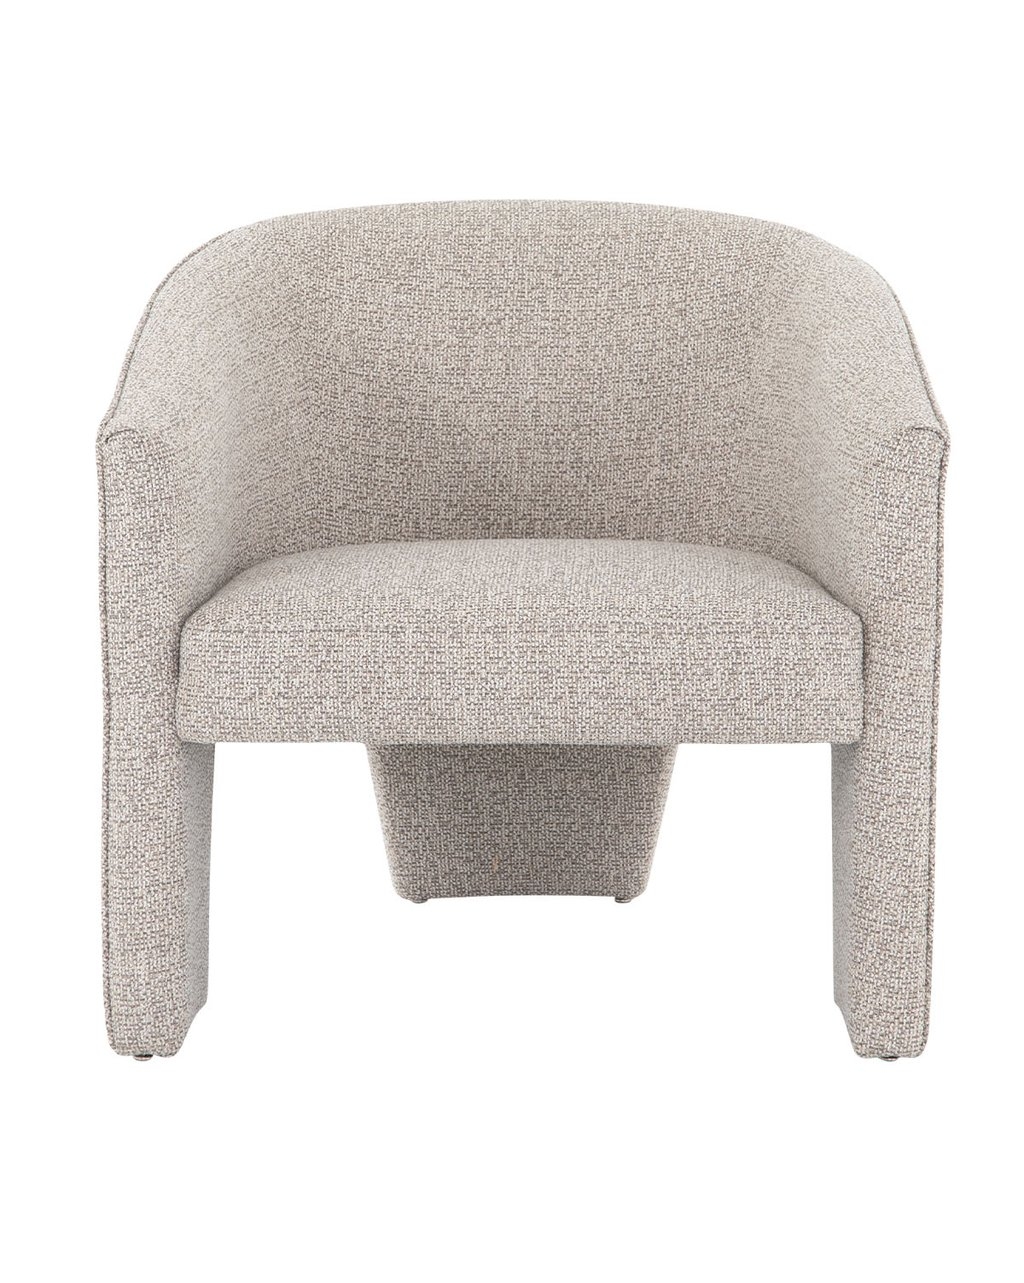 Amberlin Chair - Image 1